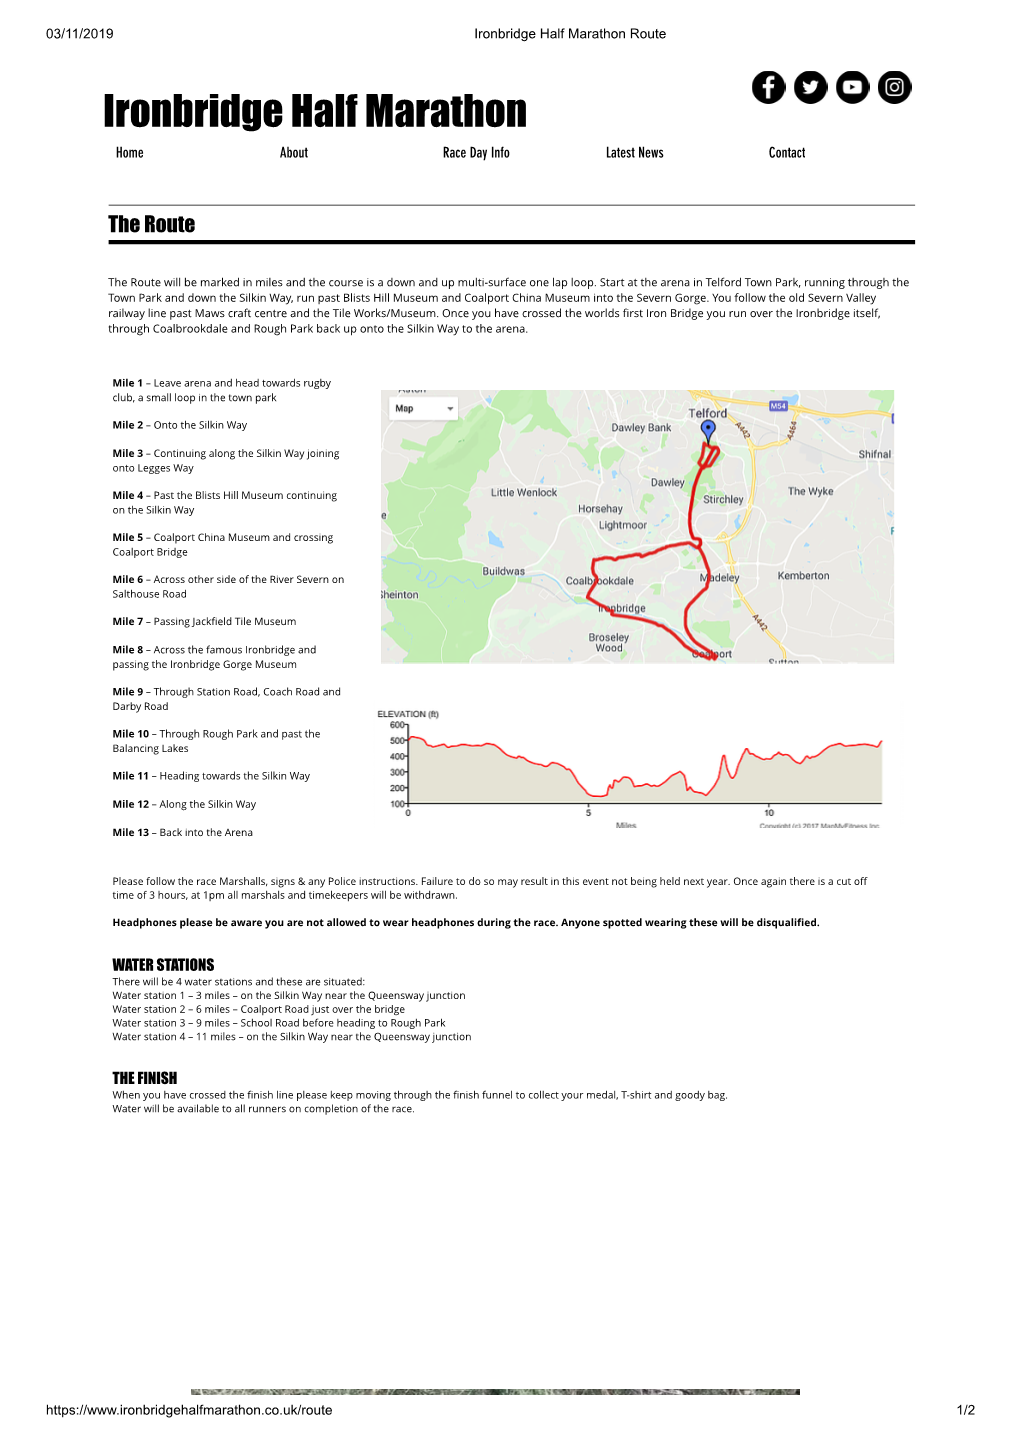 Ironbridge Half Marathon Route 2020